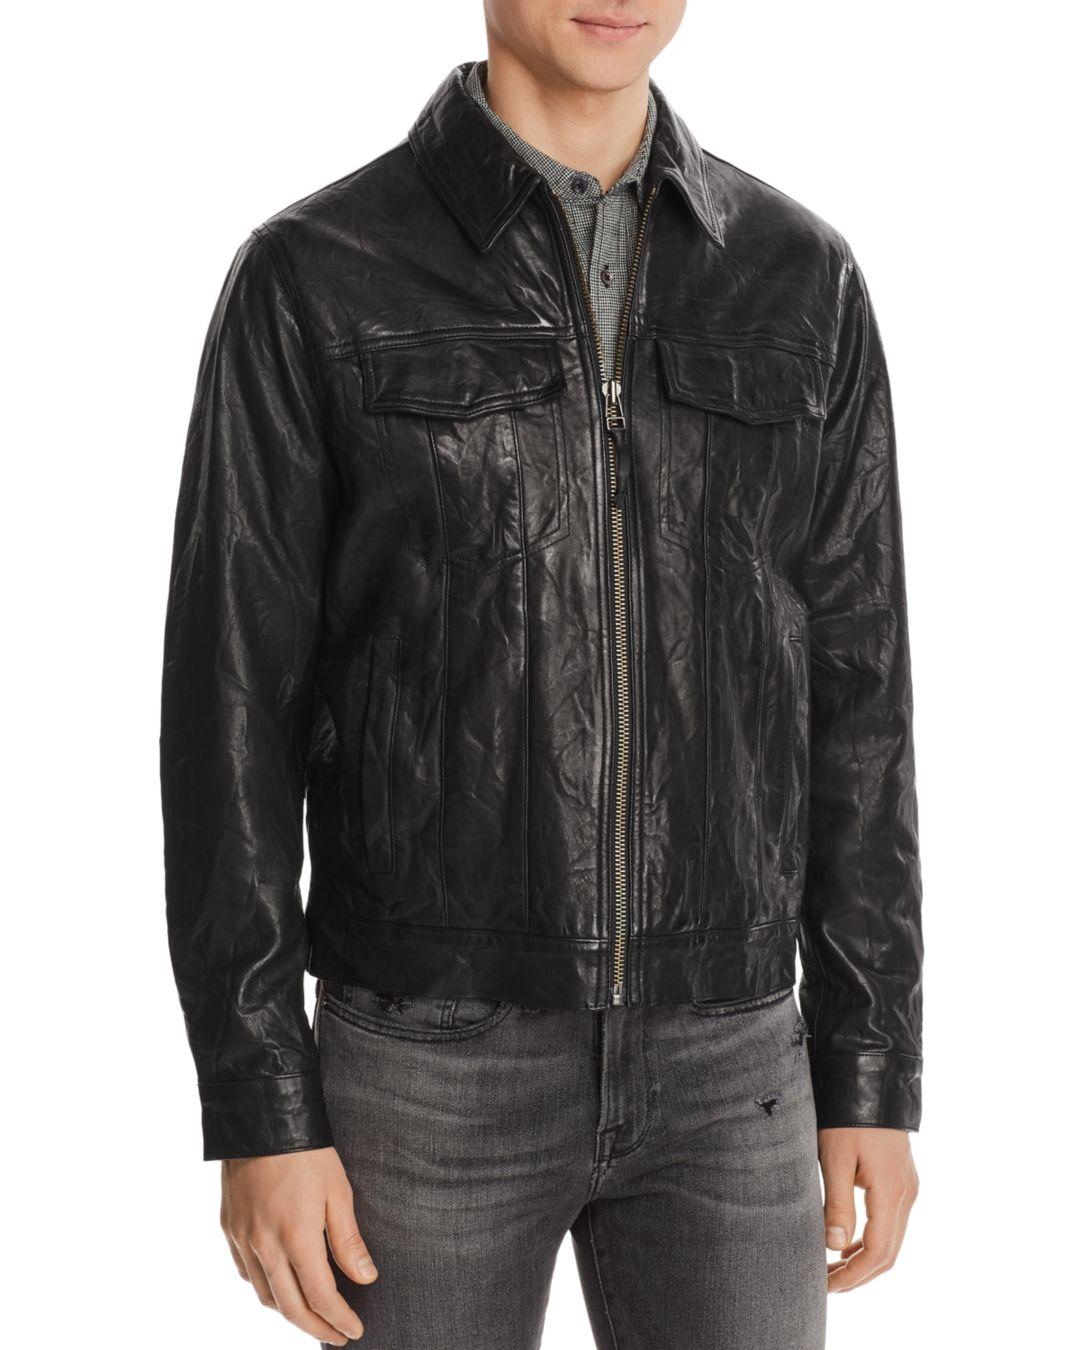 FRAME Leather Trucker Jacket in Black for Men - Lyst